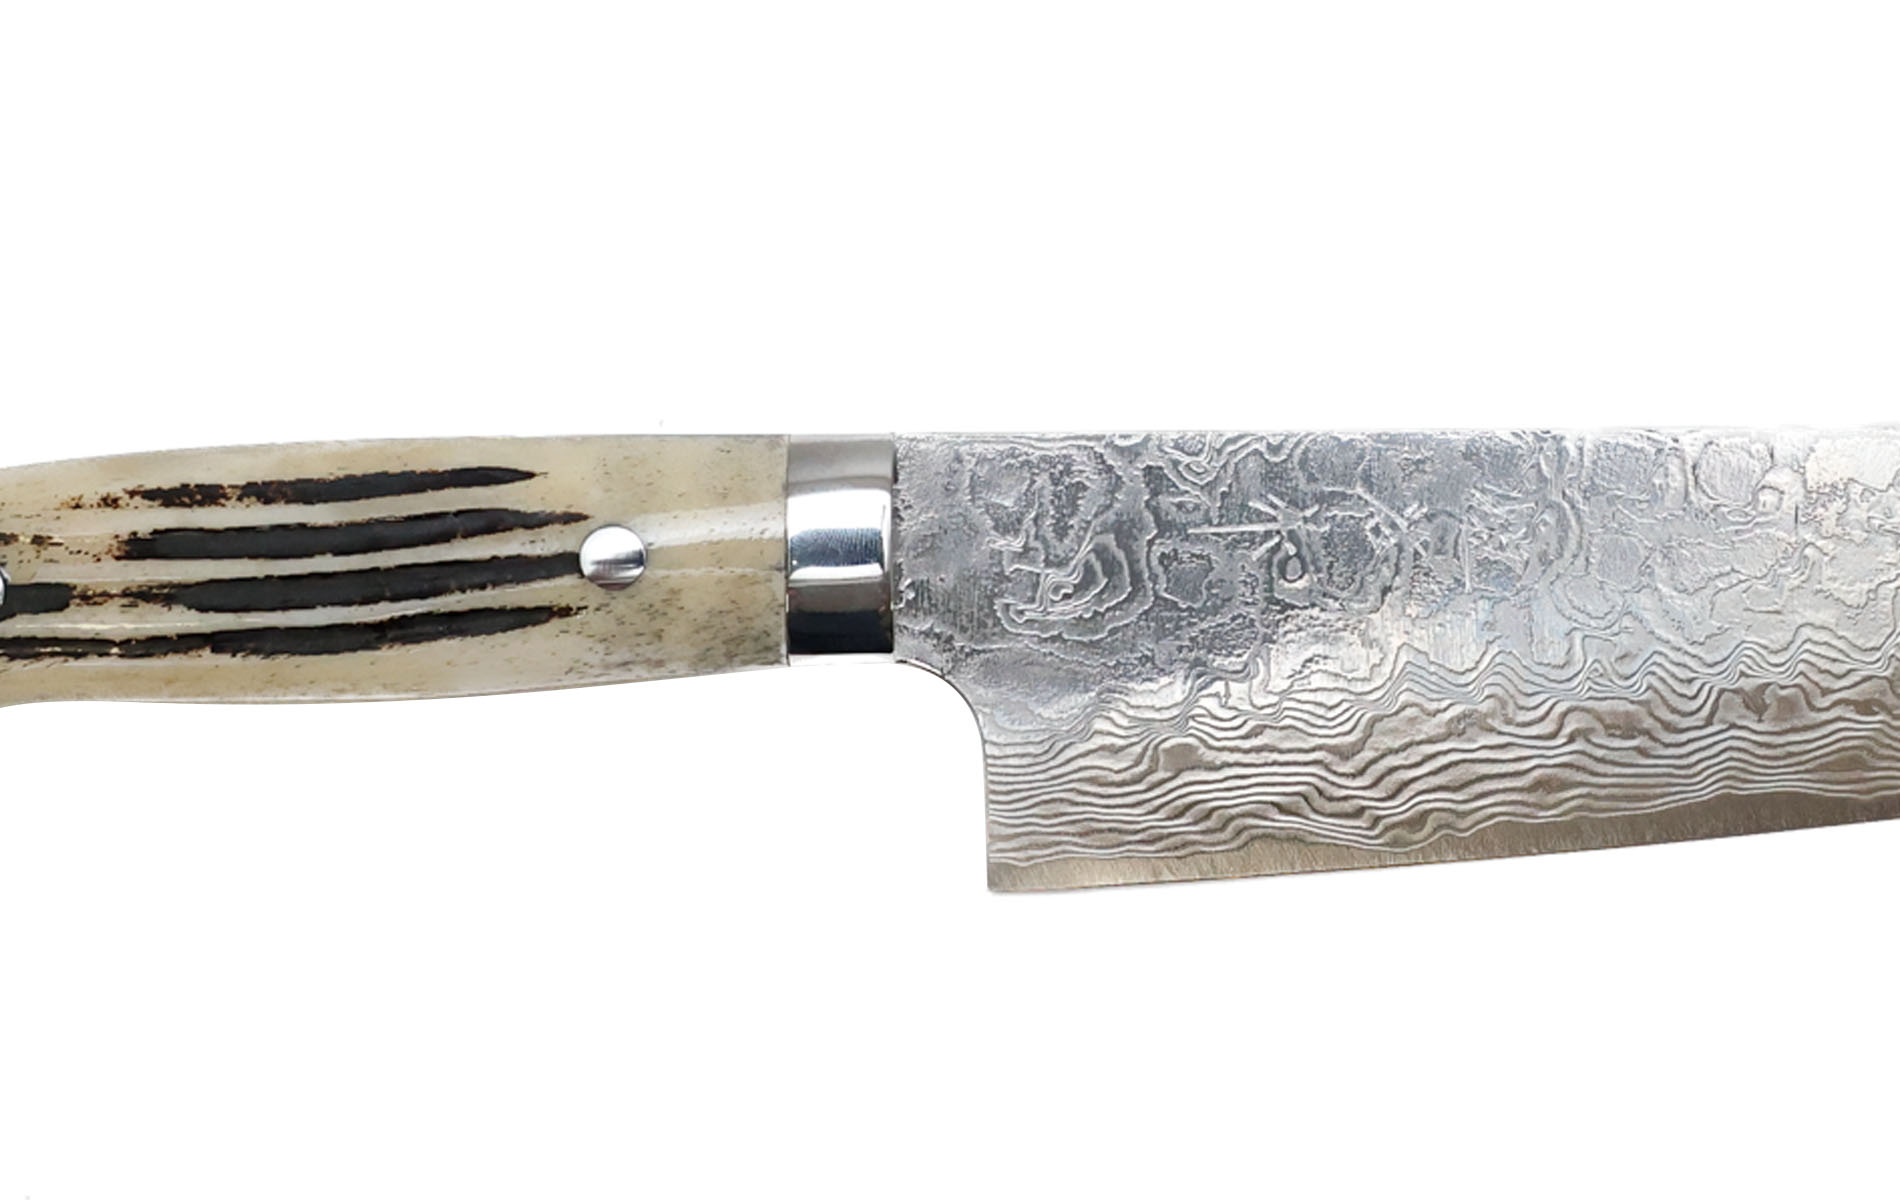 Couteau japonais artisanal SG-2 damas polish de Takeshi Saji - Couteau gyuto 24 cm